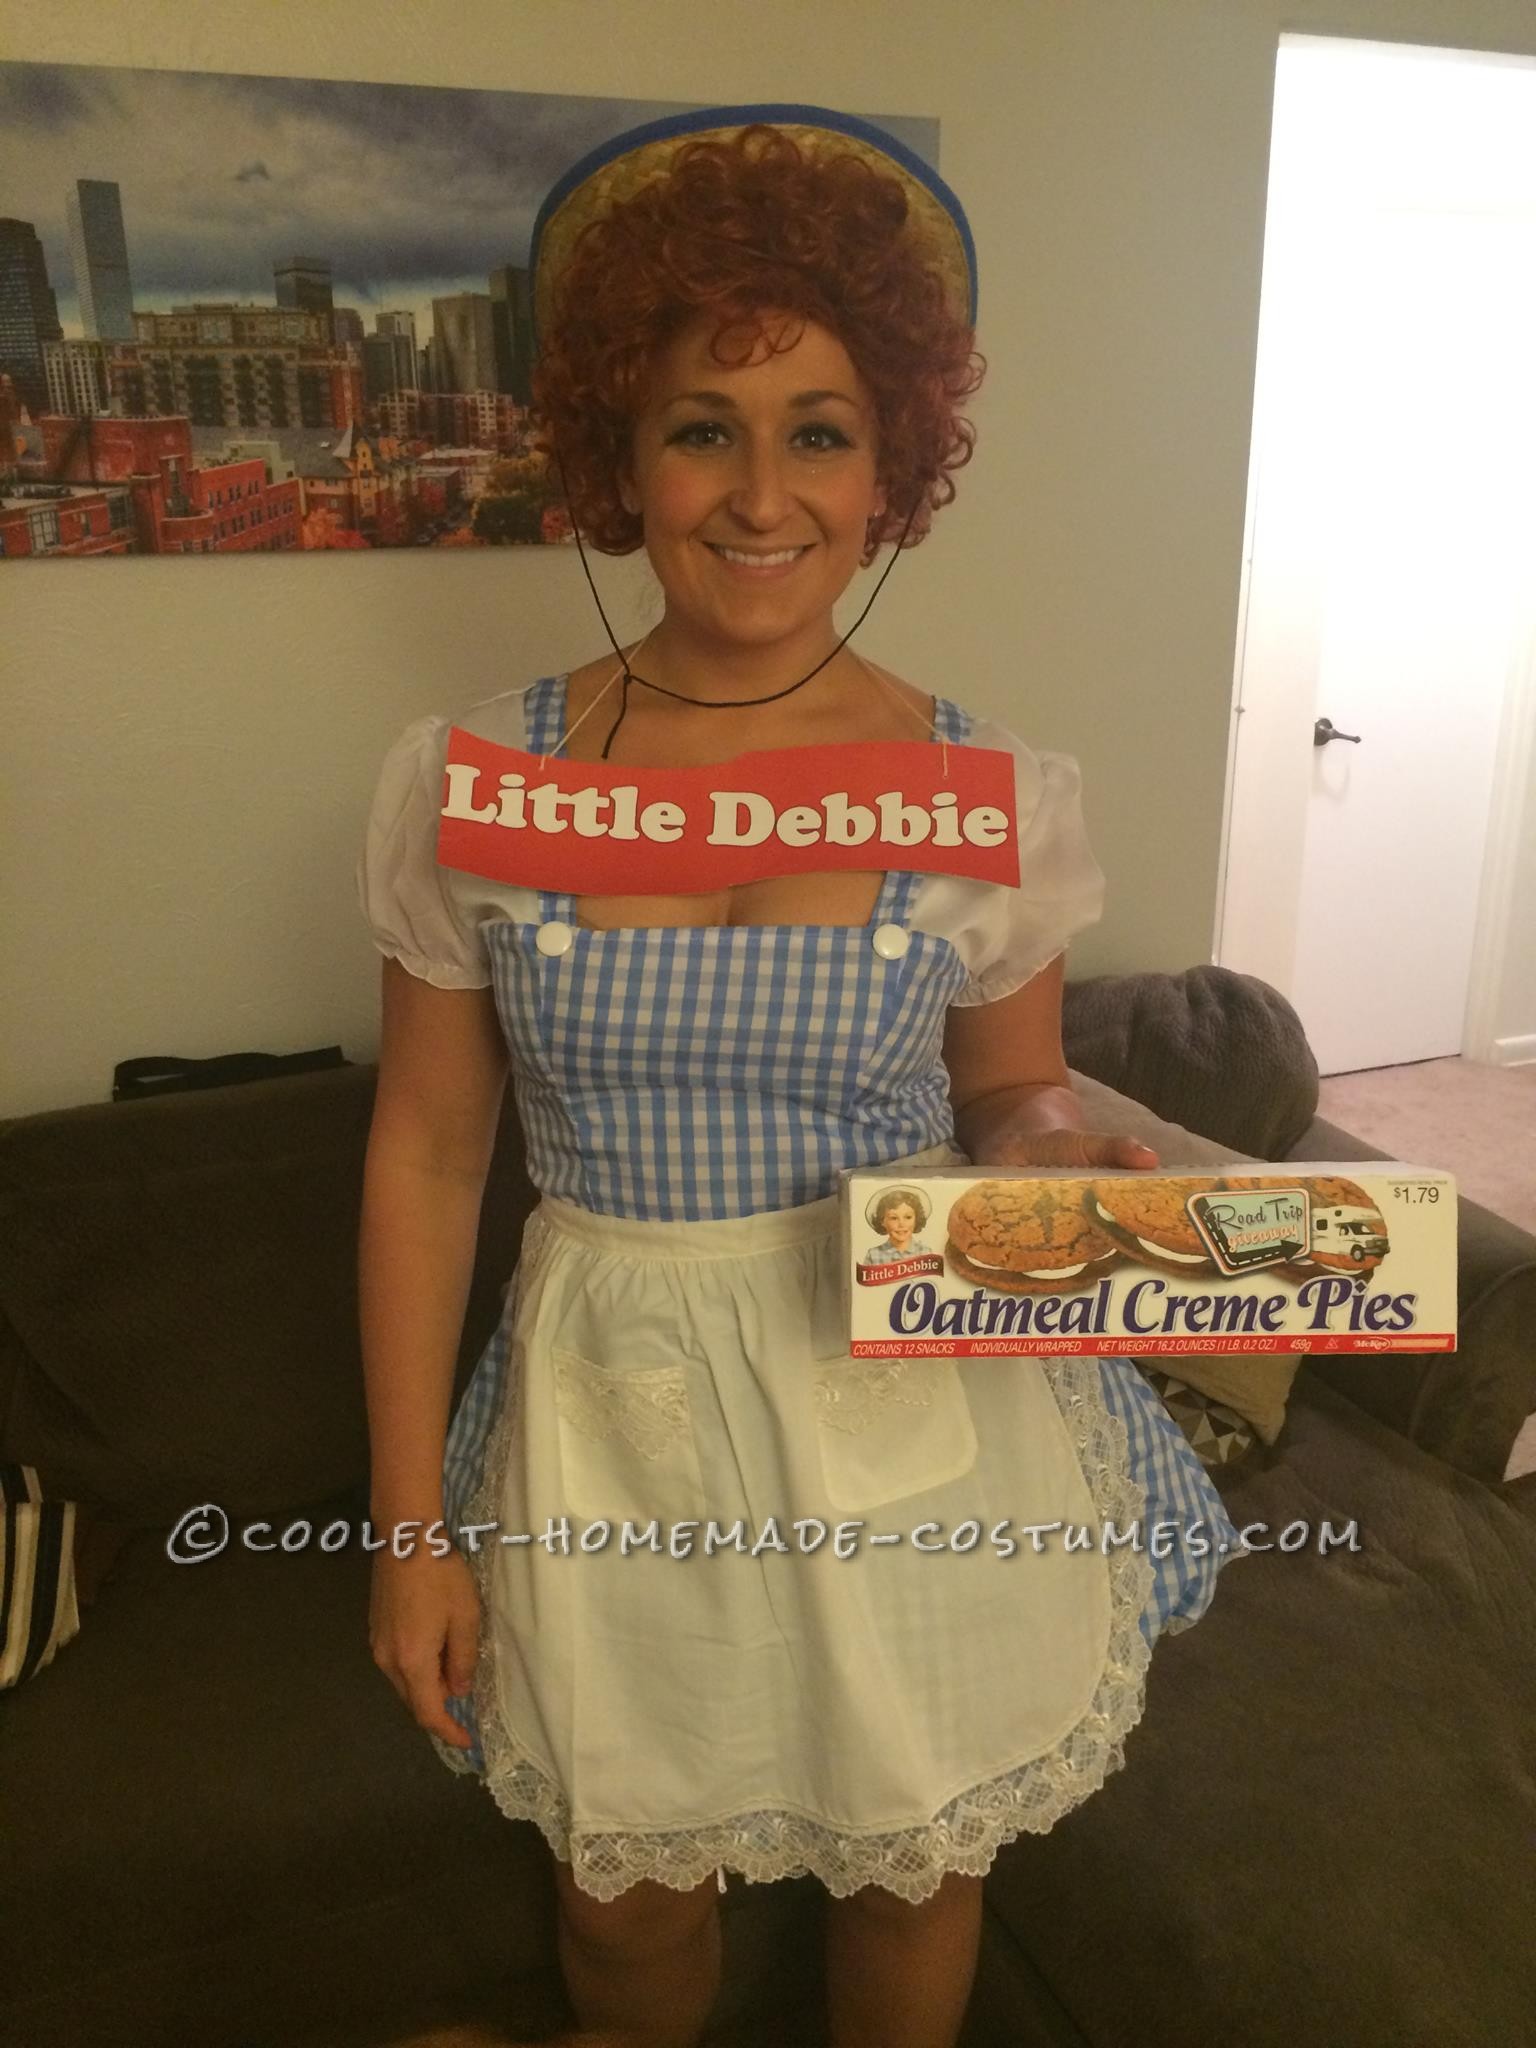 Homemade Little Debbie Costume - Snack Cakes for All!